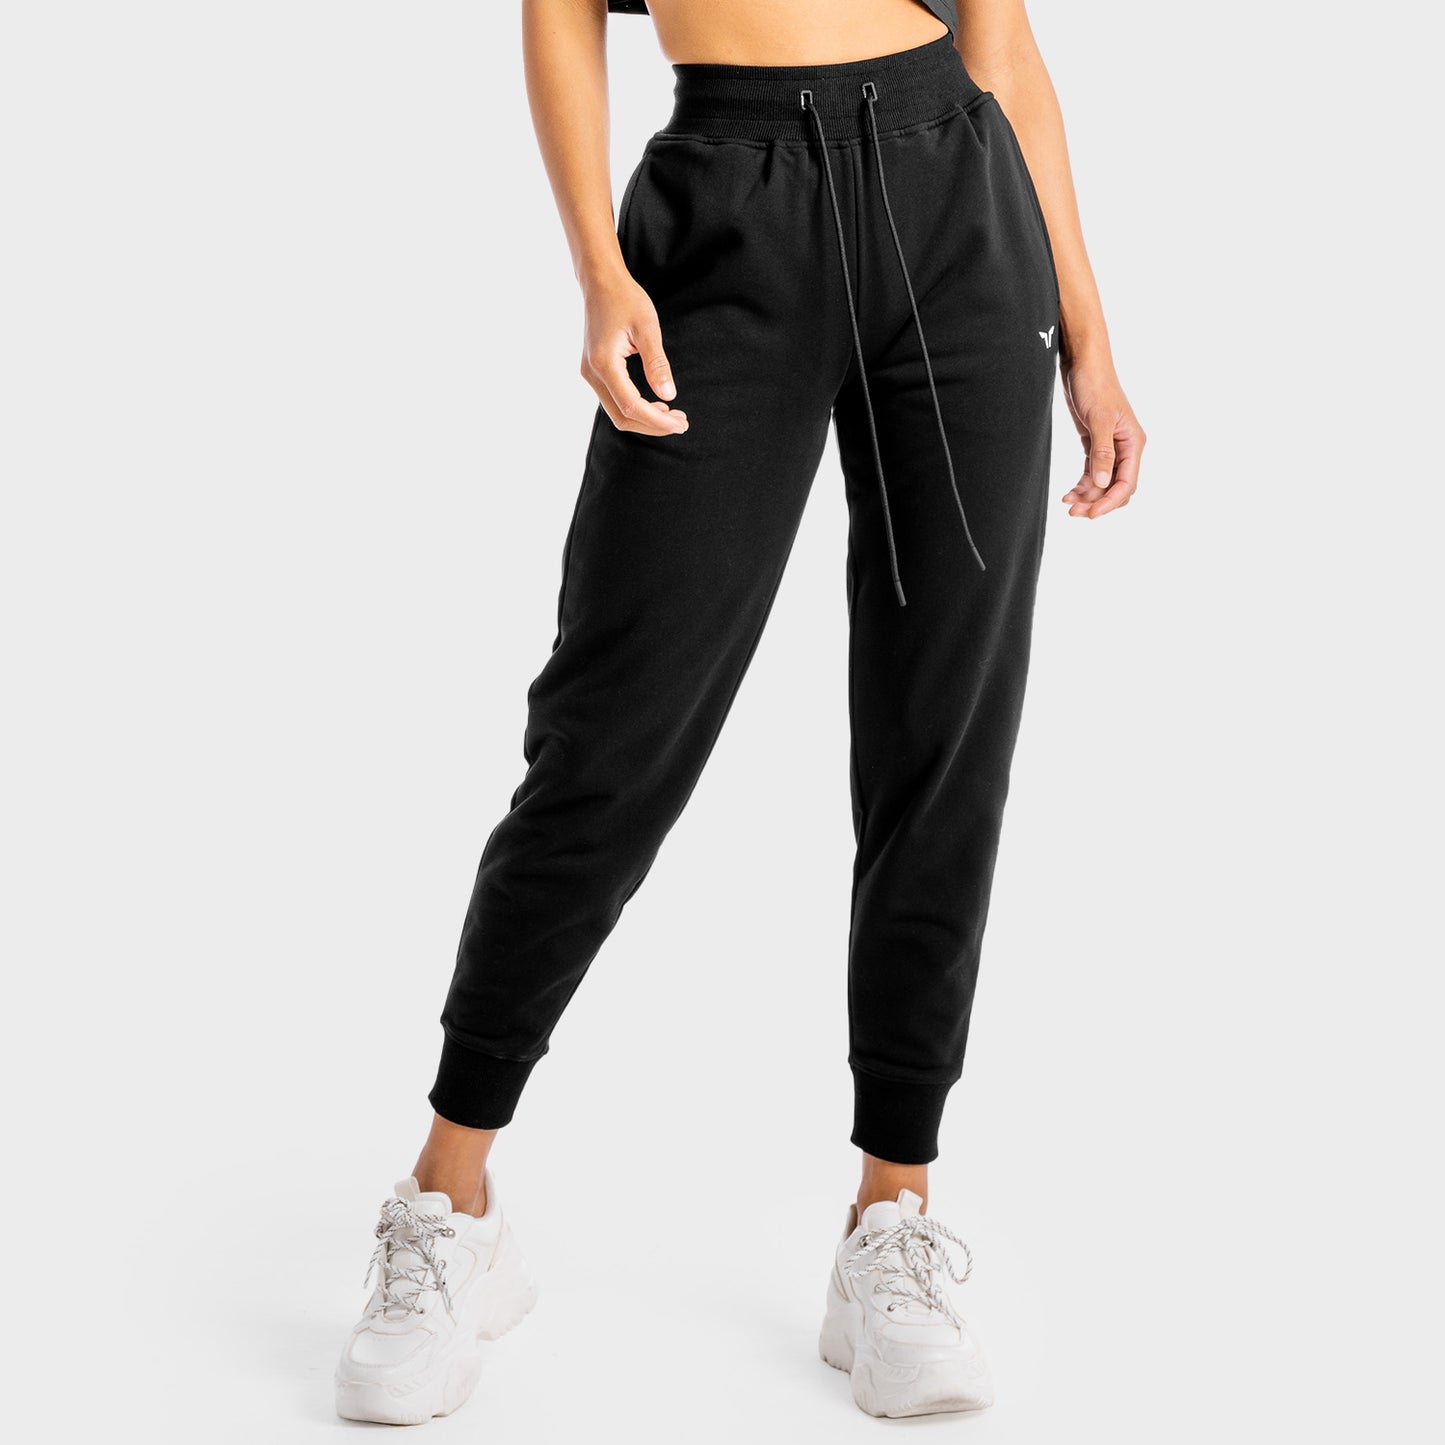 squatwolf-gym-pants-for-women-core-oversize-joggers-black-workout-clothes